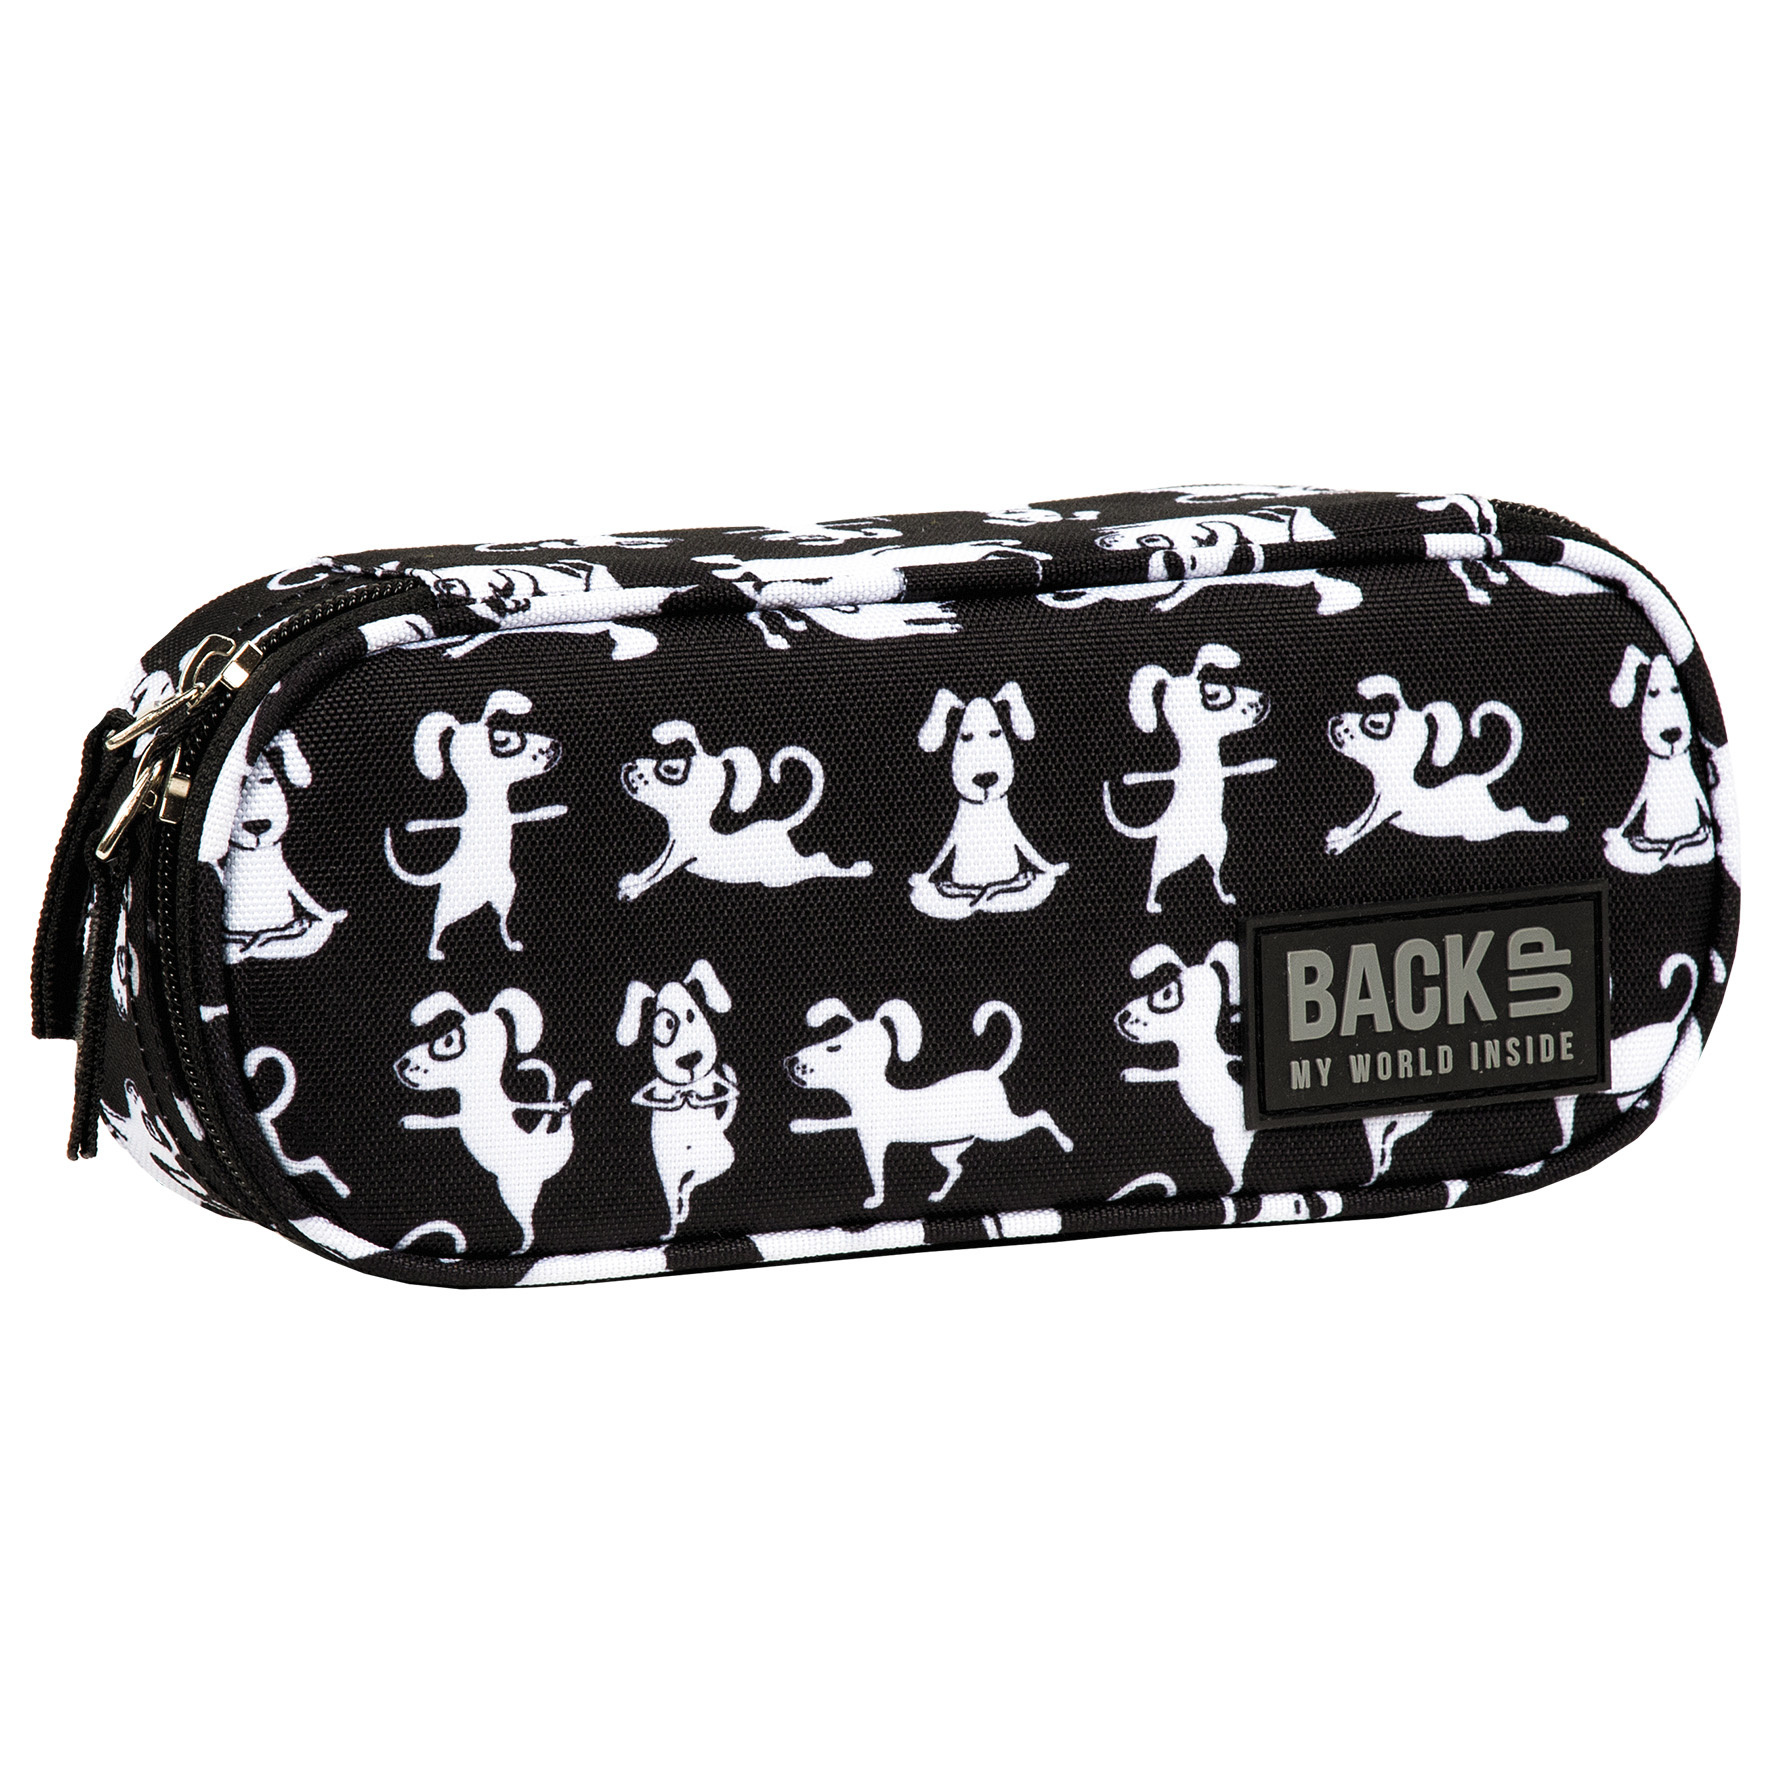 BackUP Yoga dogs pouch - 20 x 13 x 5 cm - Black